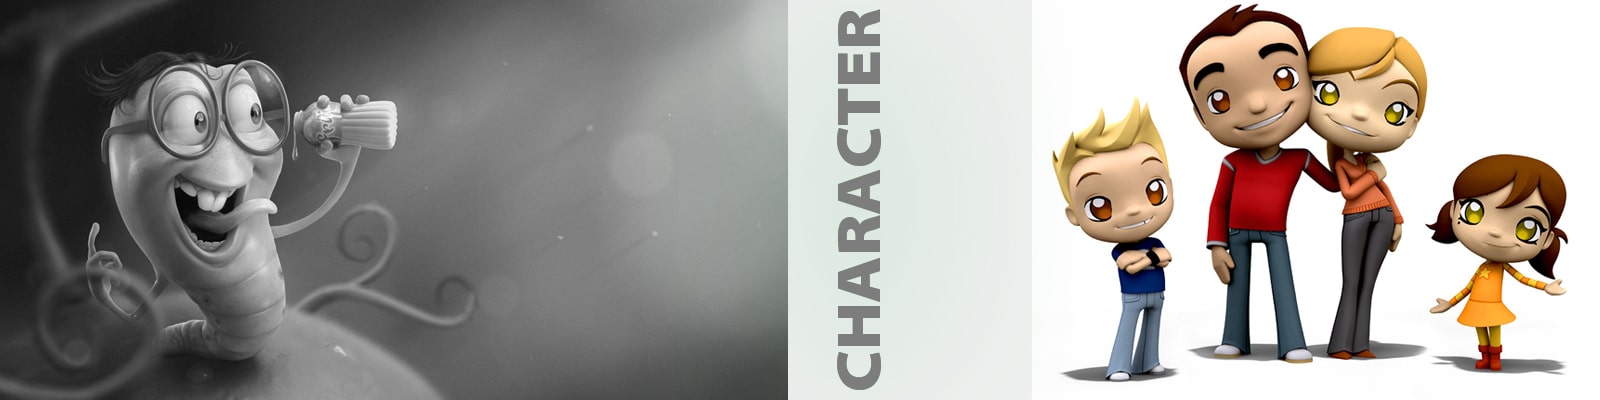 character creation